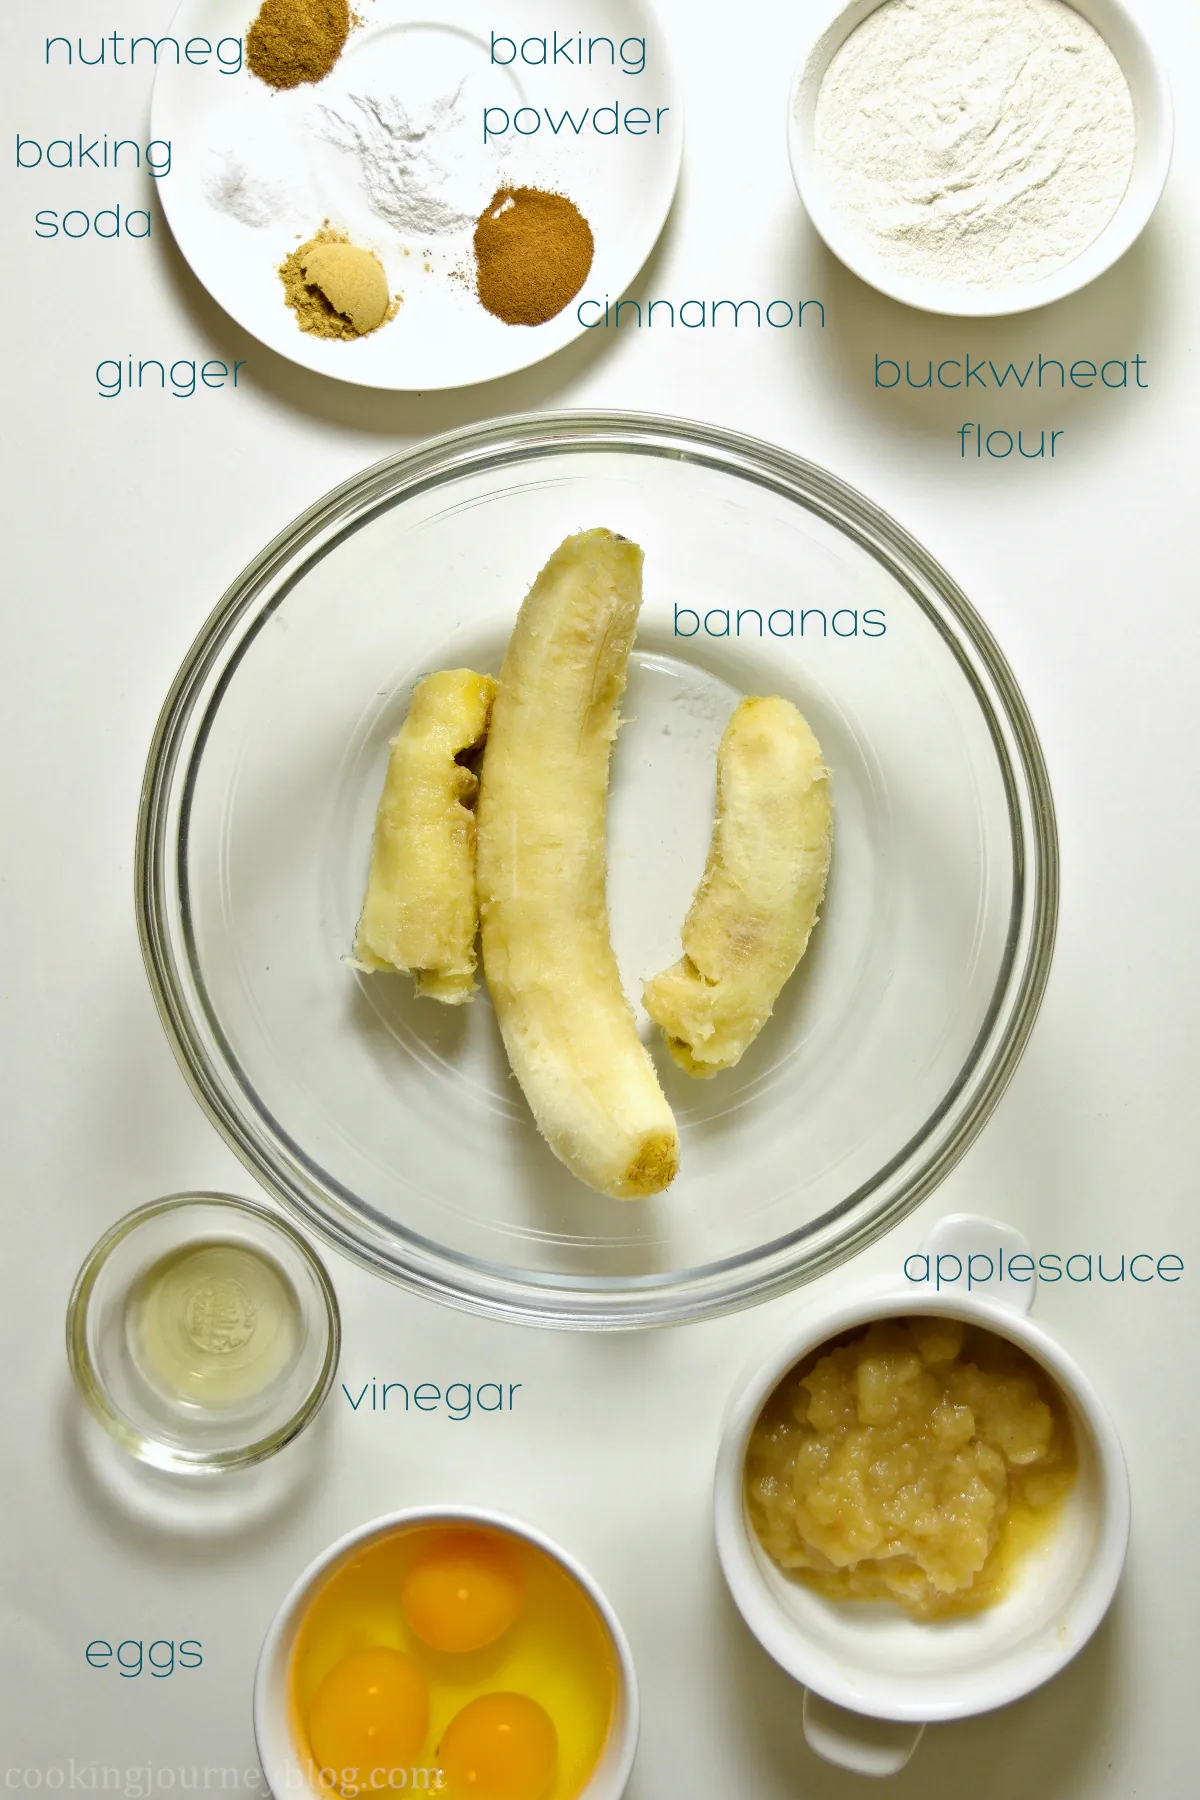 Ingredients for banana buckwheat muffins: nutmeg, baking powder, baking soda, cinnamon, ginger, buckwheat flour, bananas, apple cider vinegar, eggs, applesauce